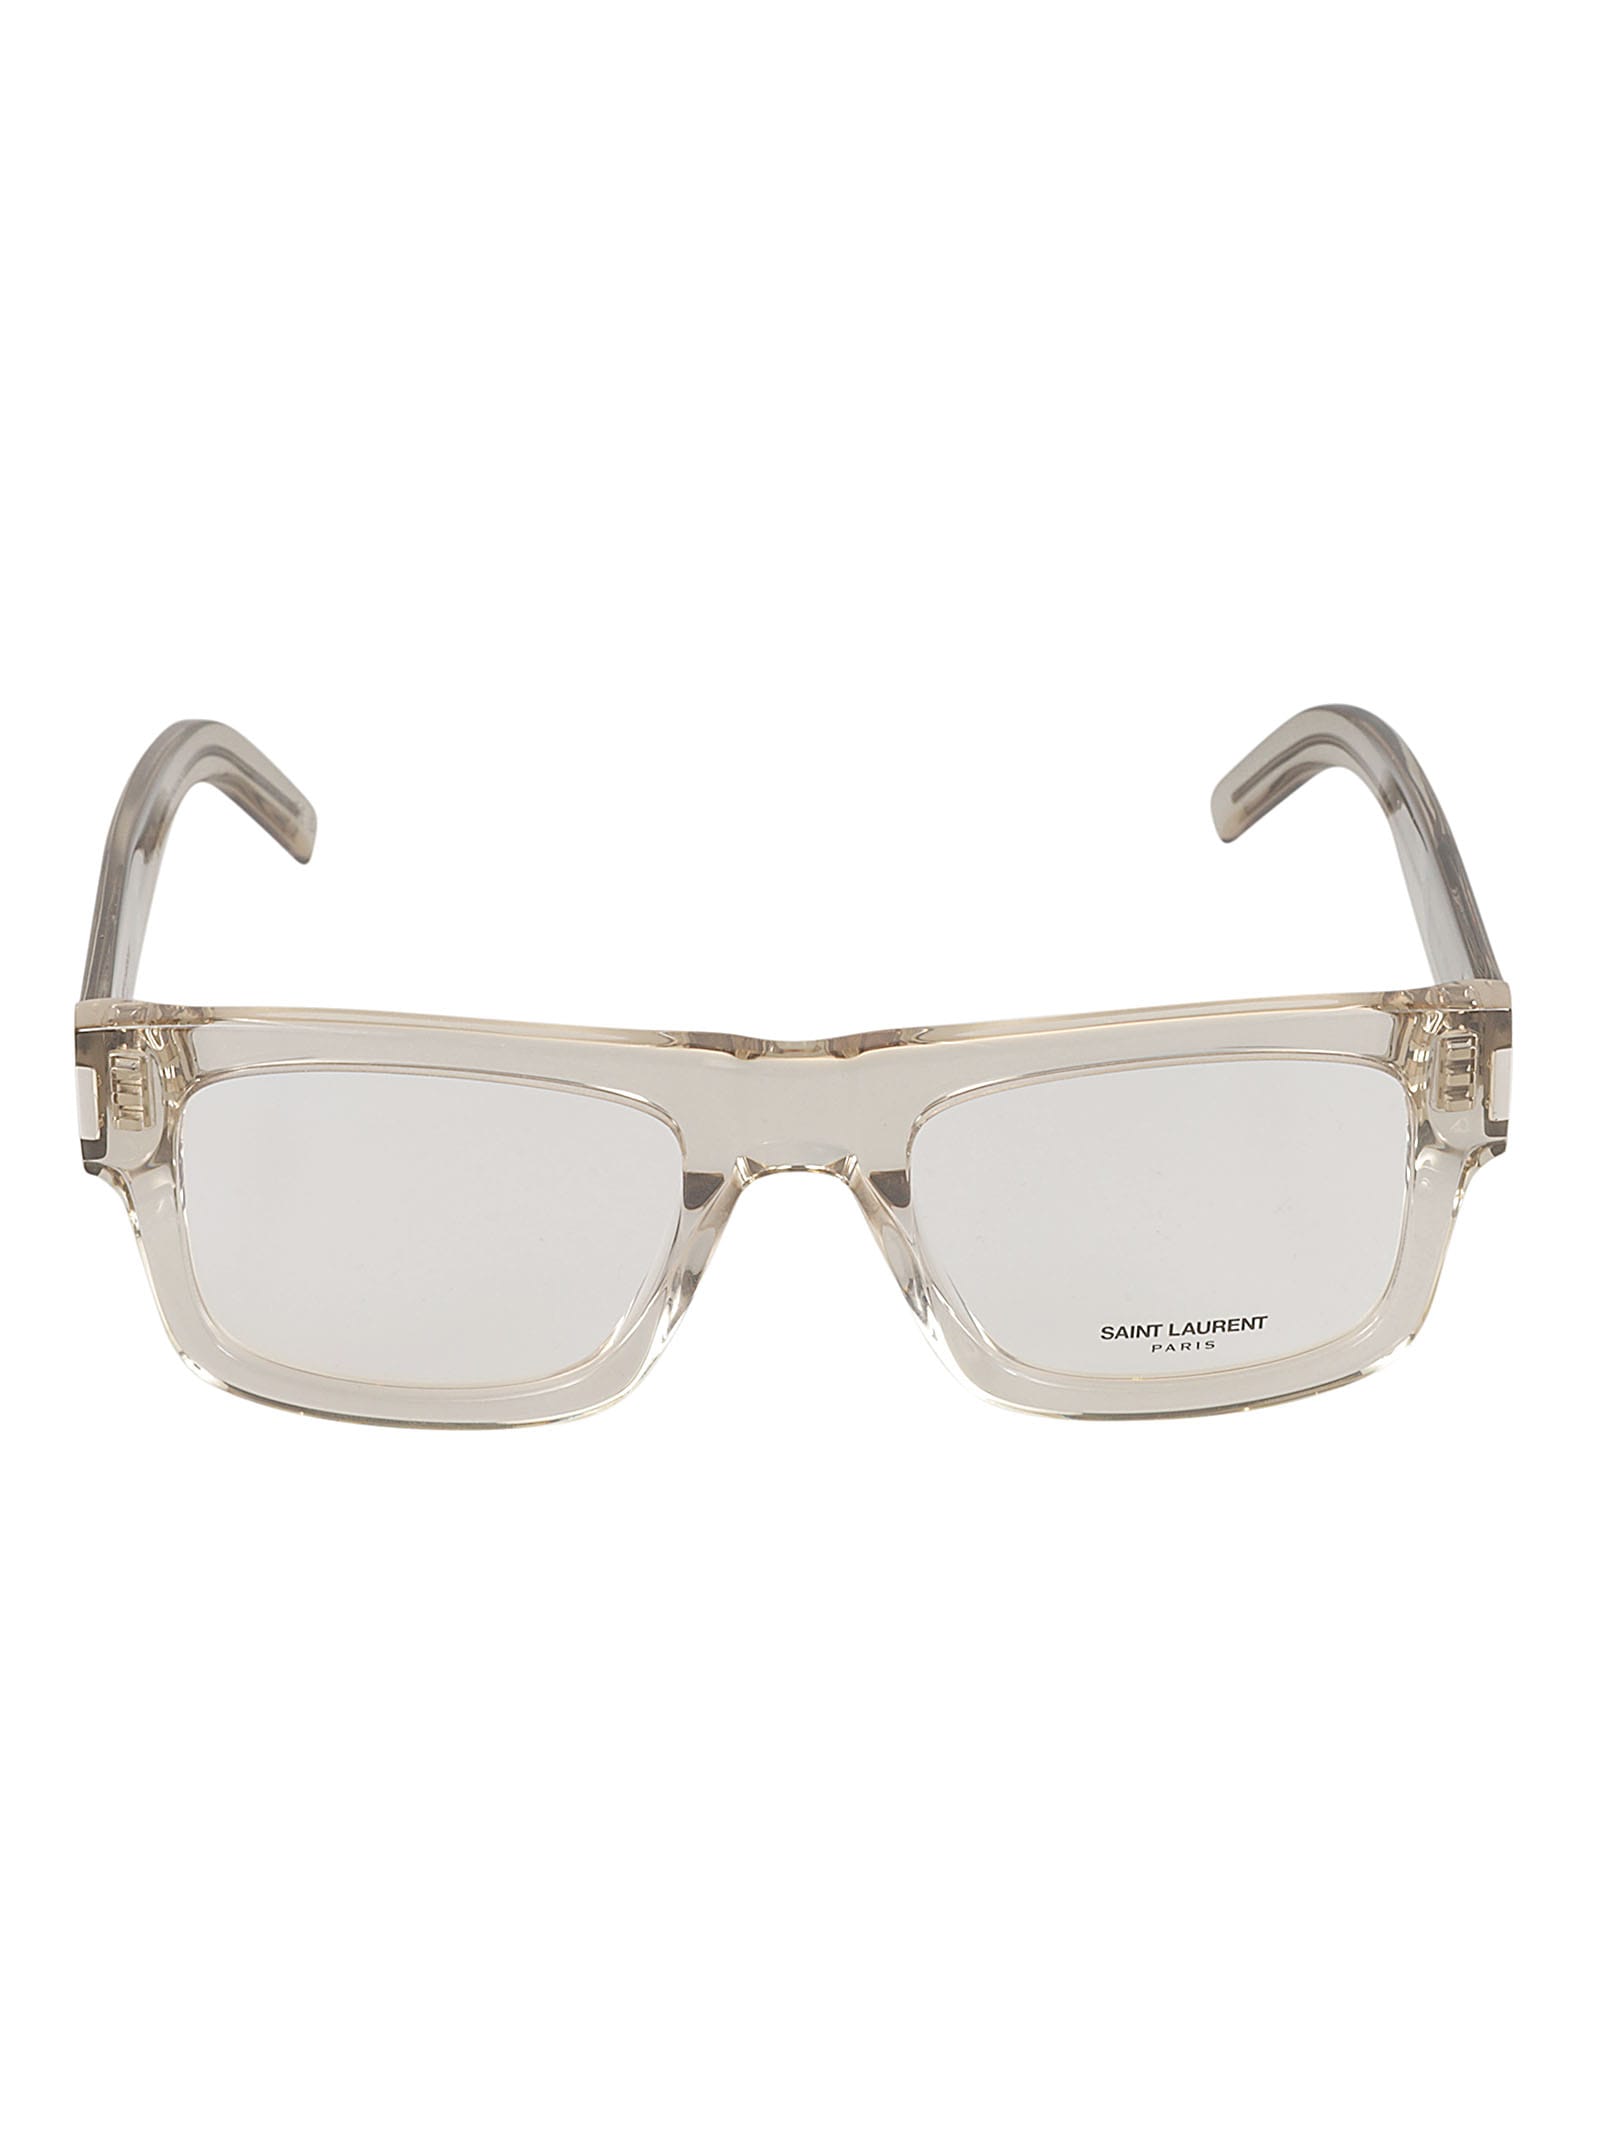 Saint Laurent Square Frame Glasses In Beige/transparent